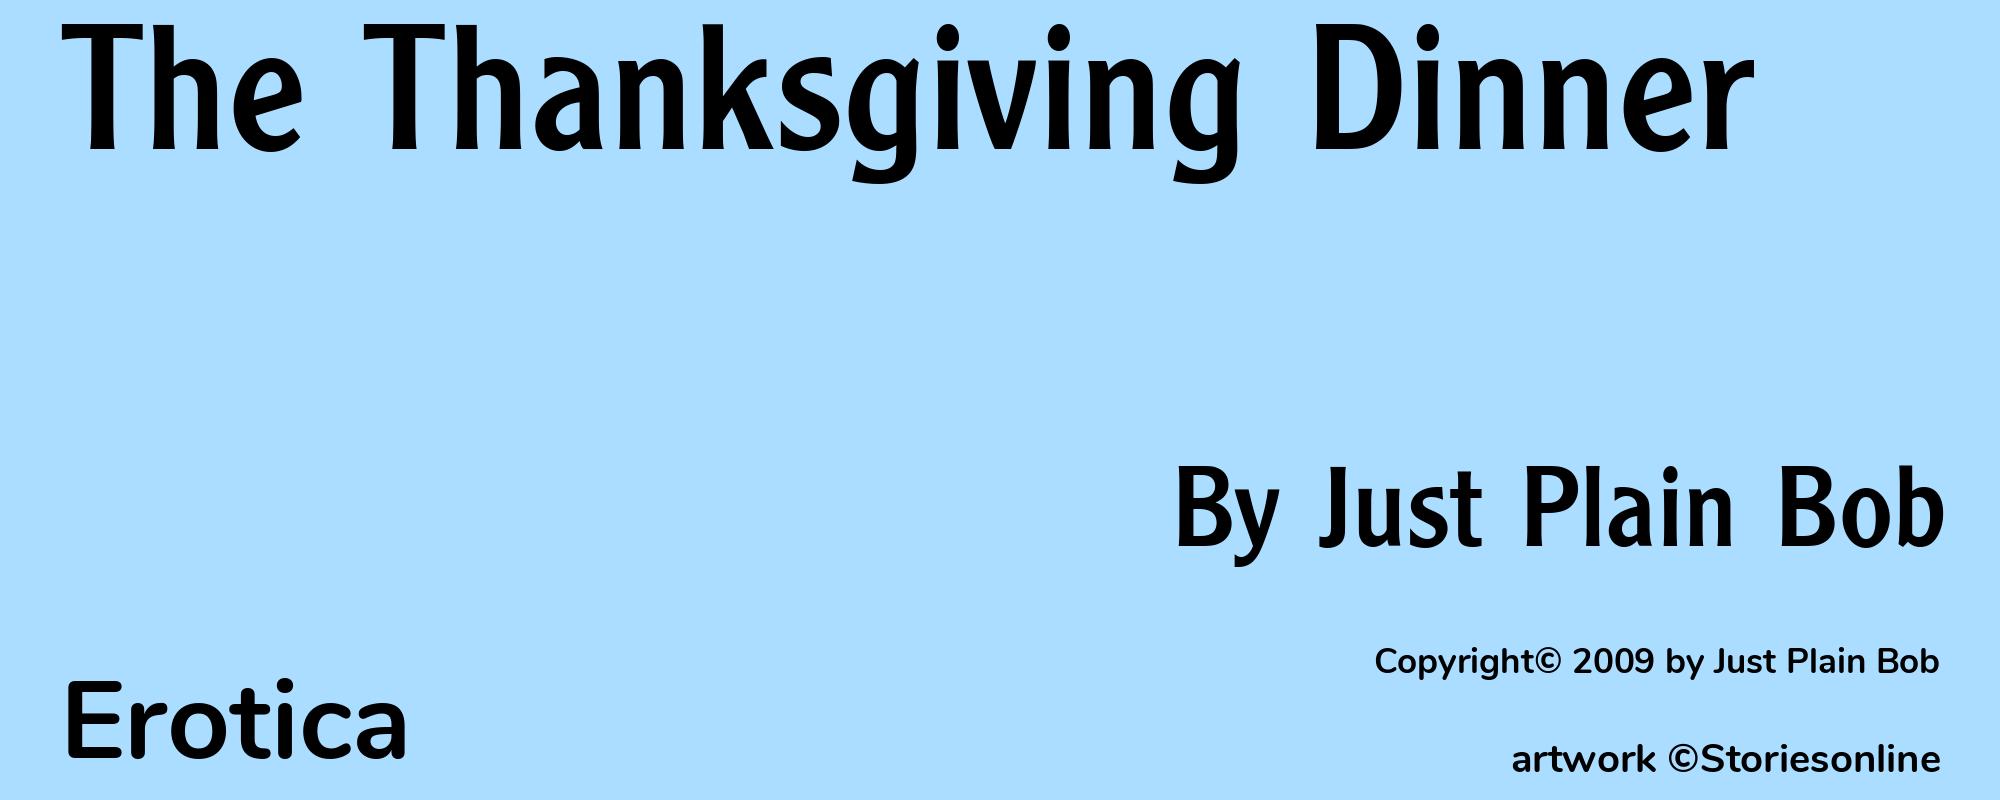 The Thanksgiving Dinner - Cover